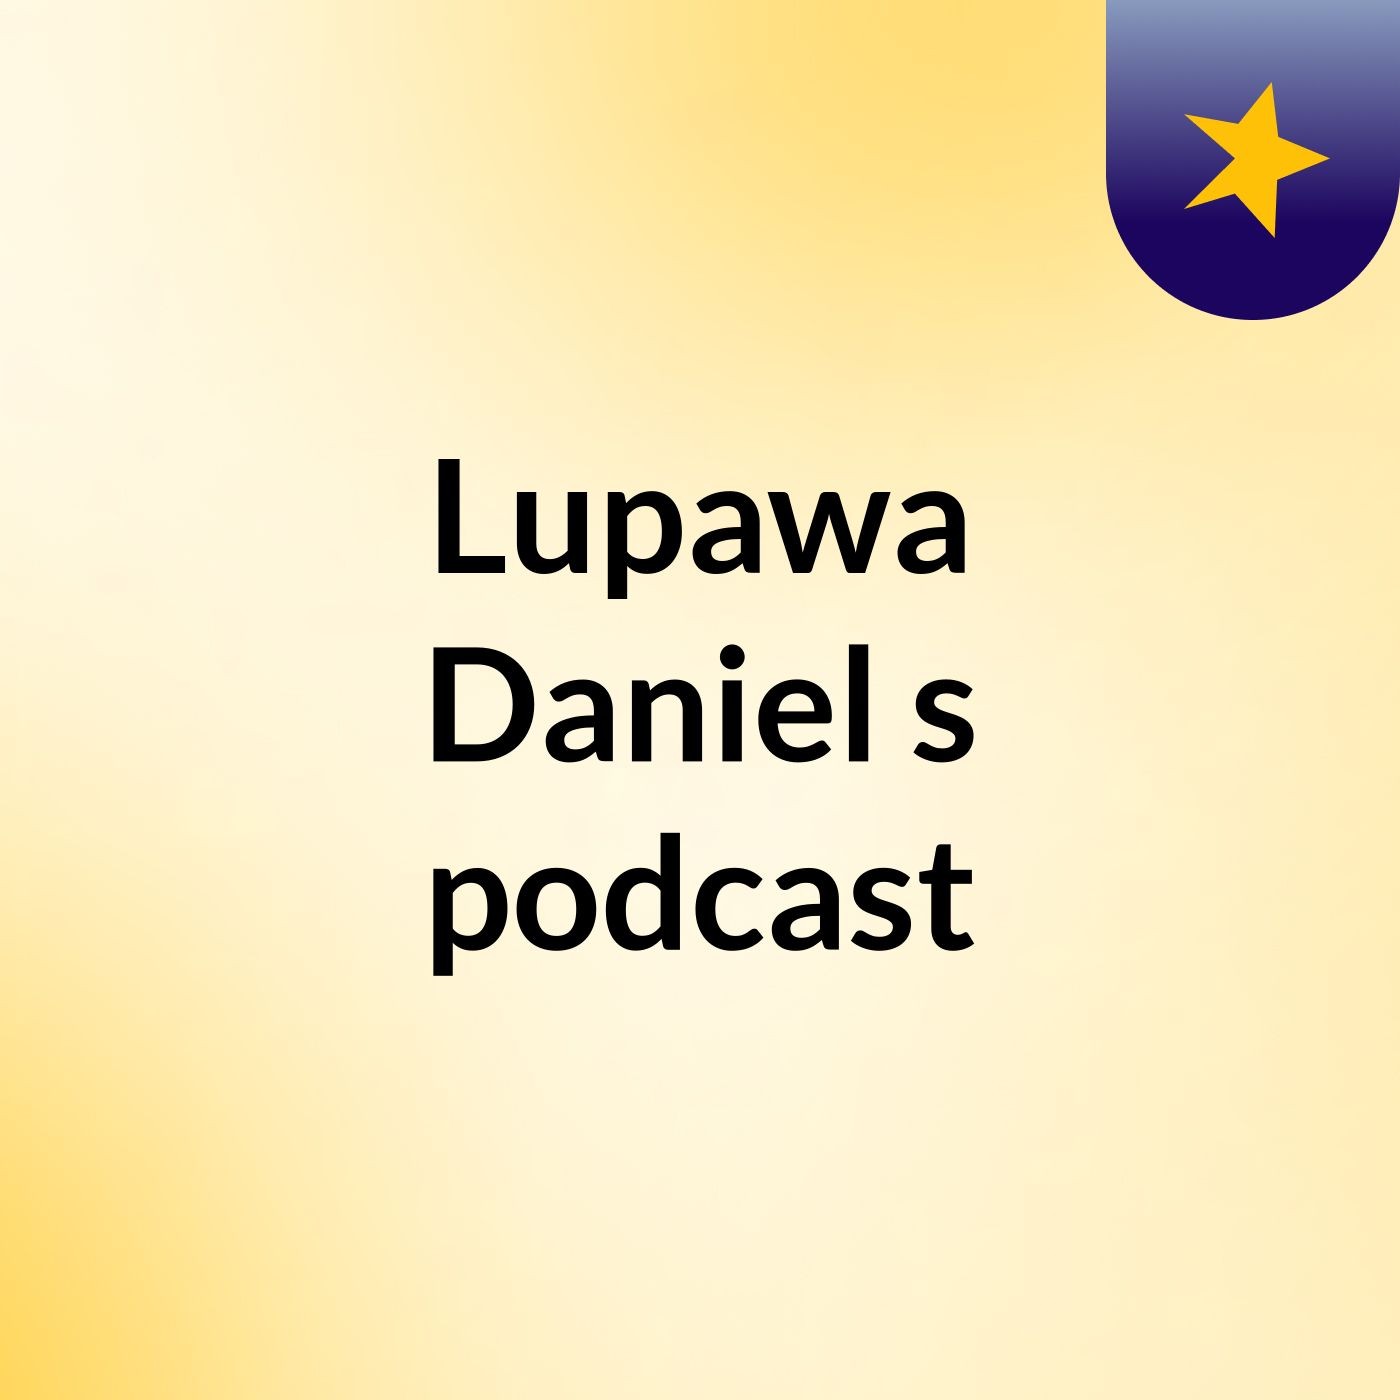 Episode 2 - Lupawa Daniel's podcast